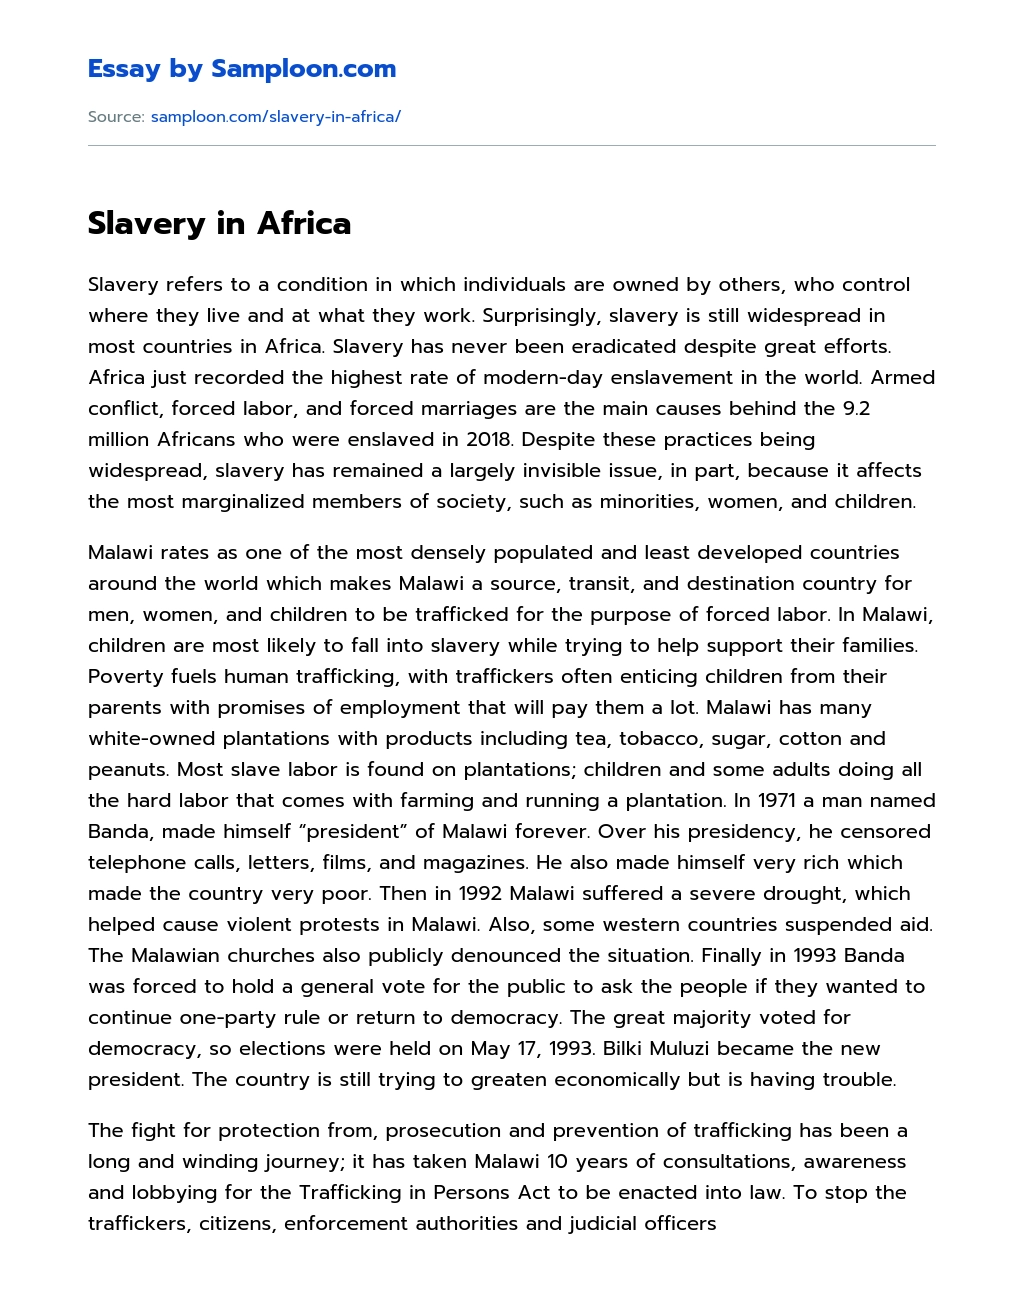 Slavery in Africa essay